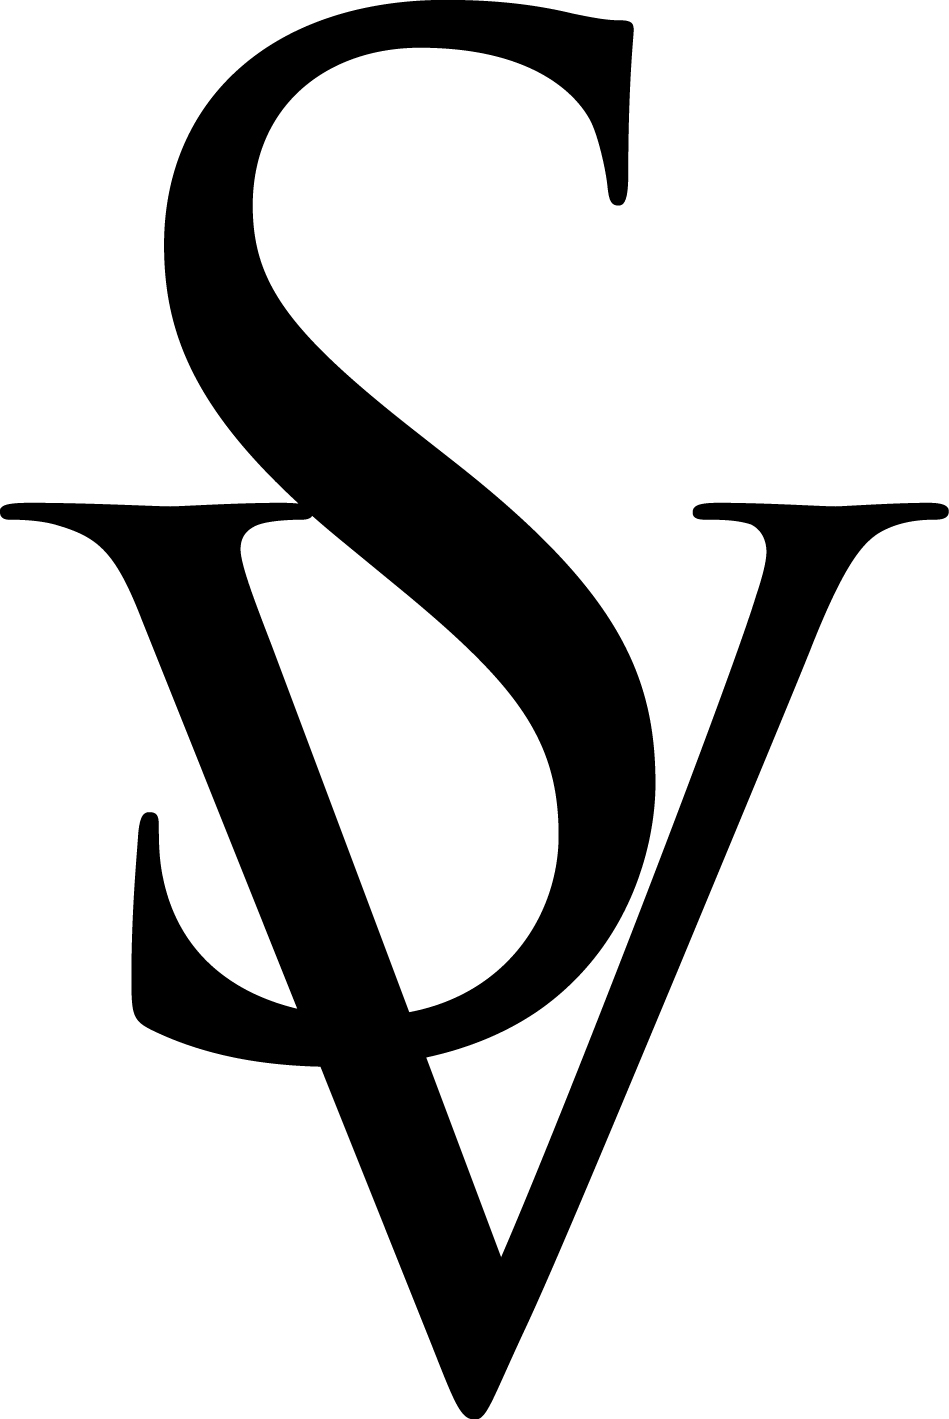 Monogram SV Logo Design Graphic by Greenlines Studios 